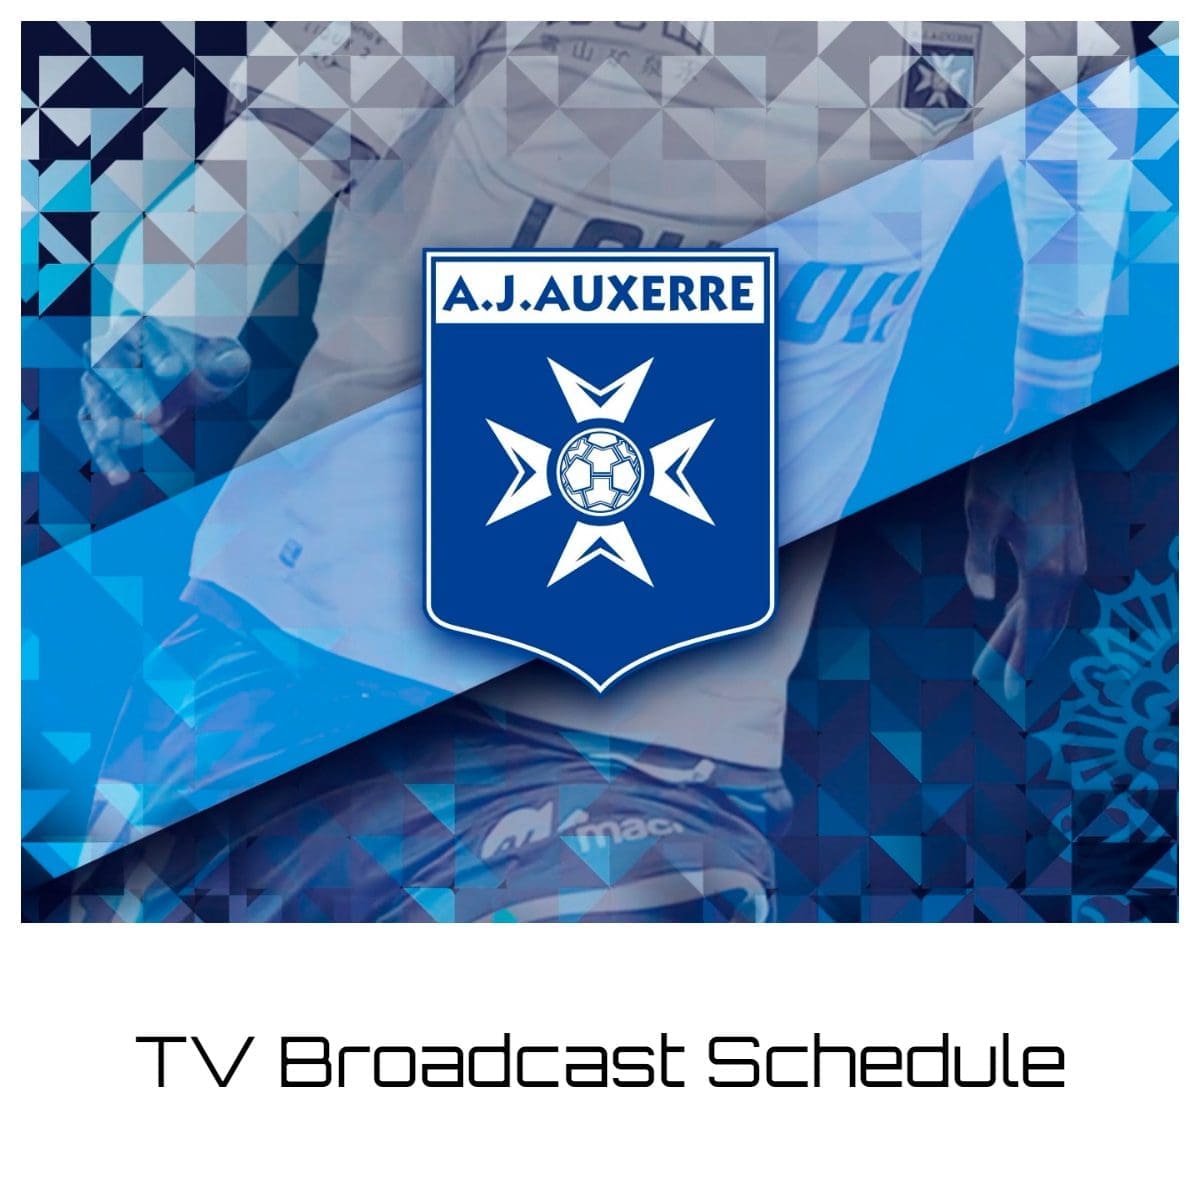 Auxerre TV Broadcast Schedule